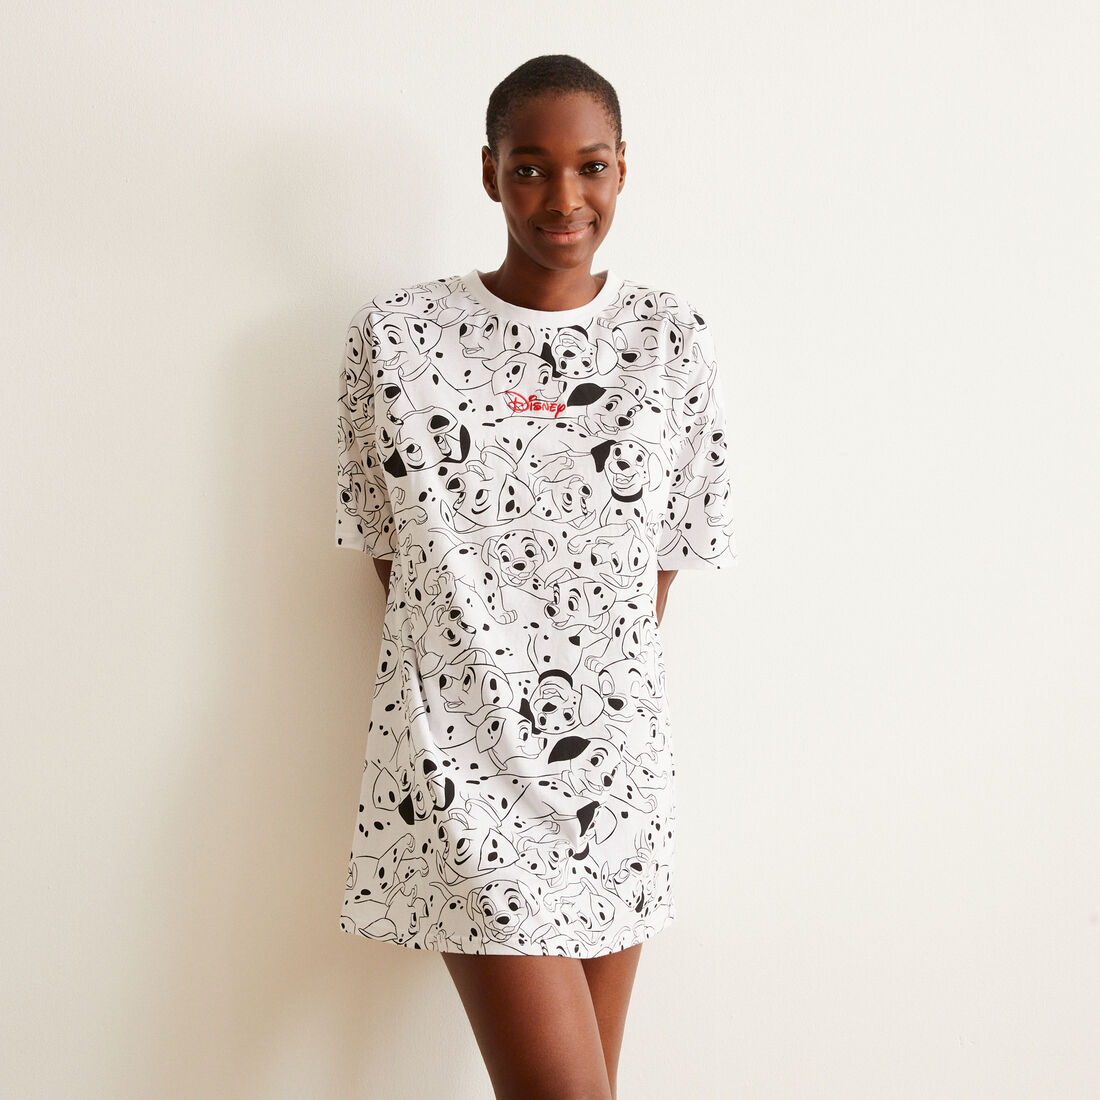 Tunic with 101 Dalmatians pattern - white ;